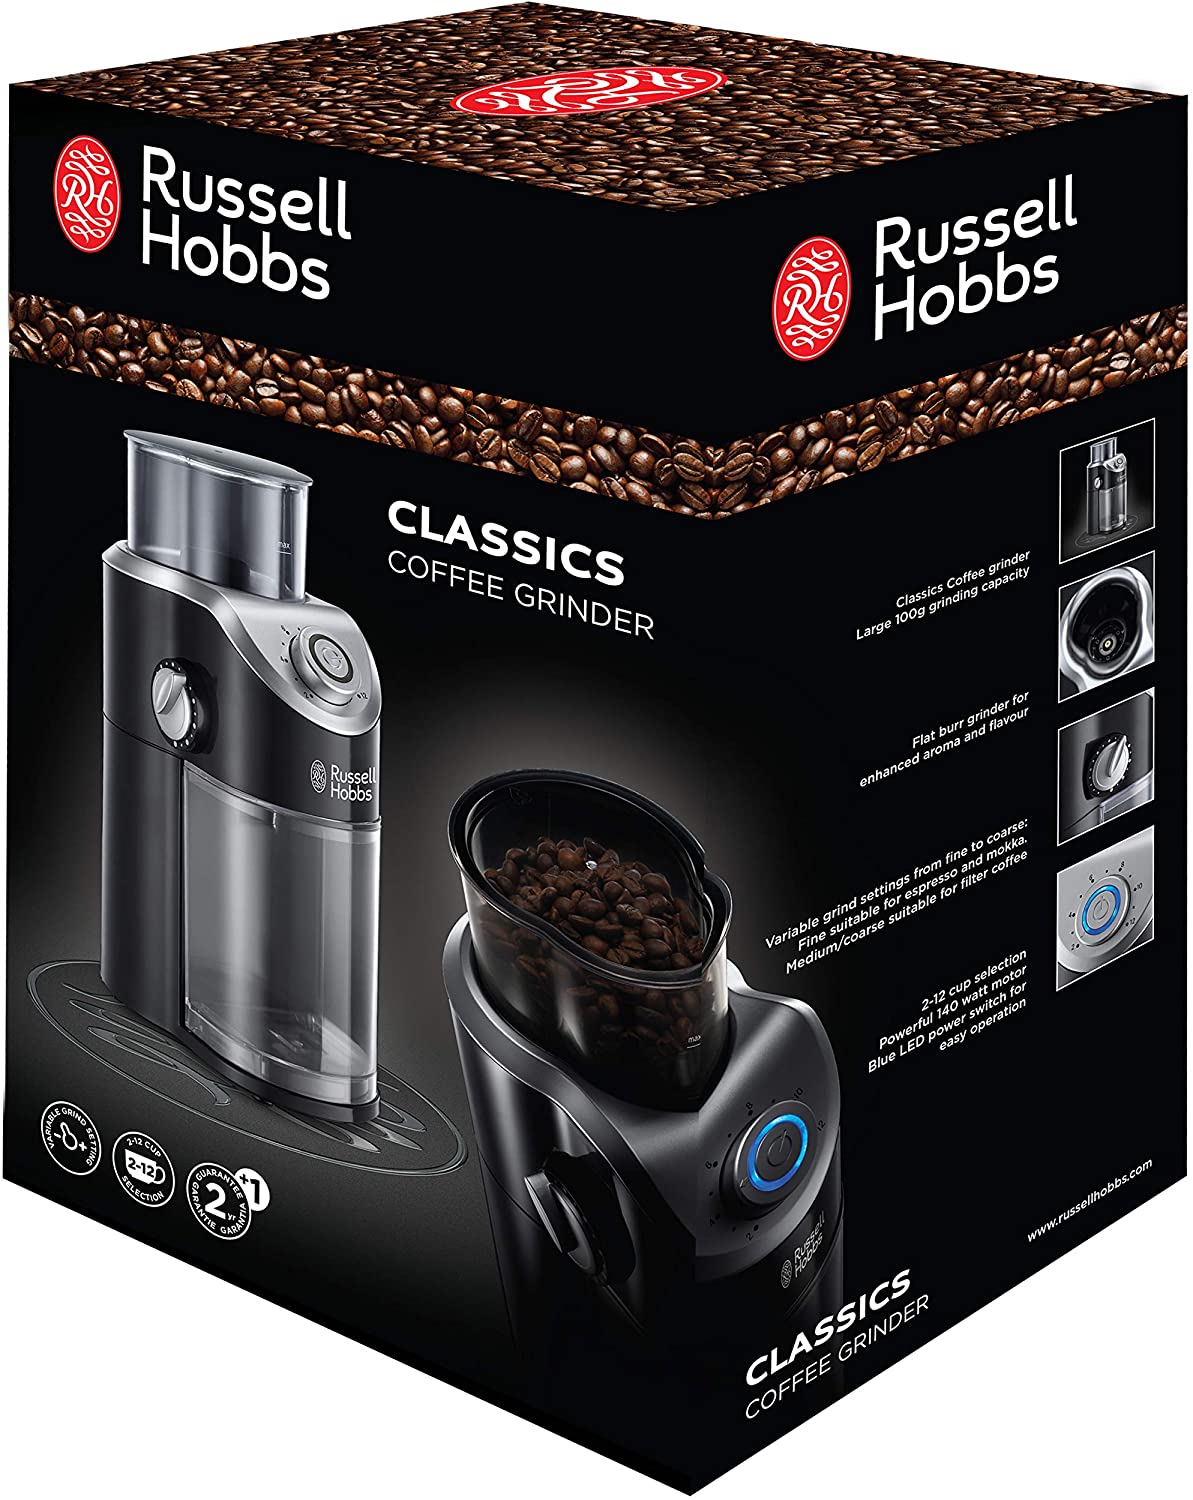 Russell Hobbs 23120 Classics Coffee Grinder Black